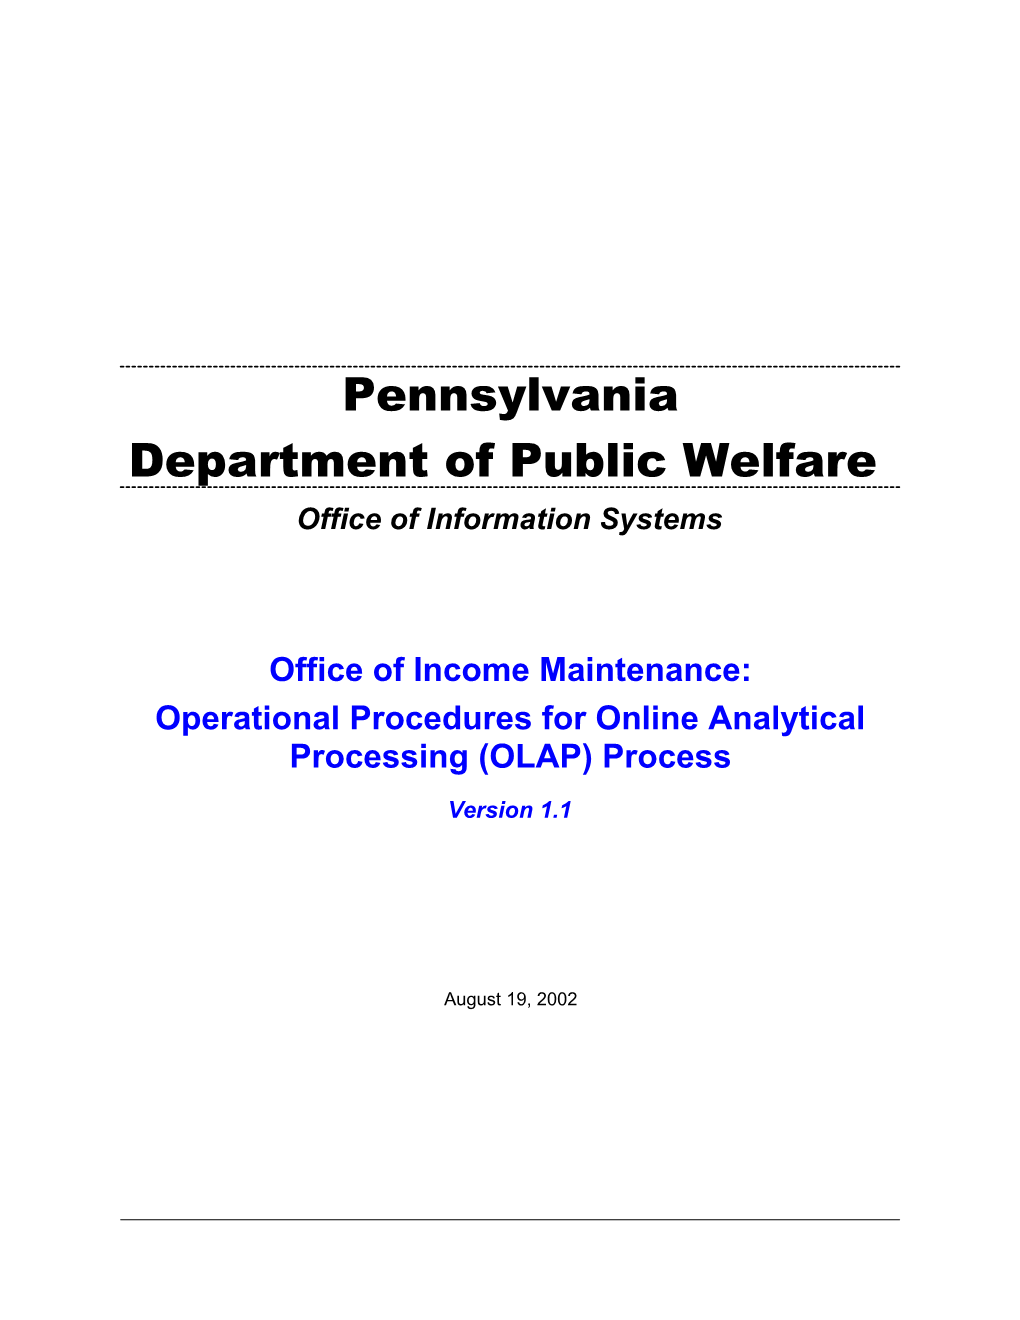 OIM Operational Procedures for OLAP Process